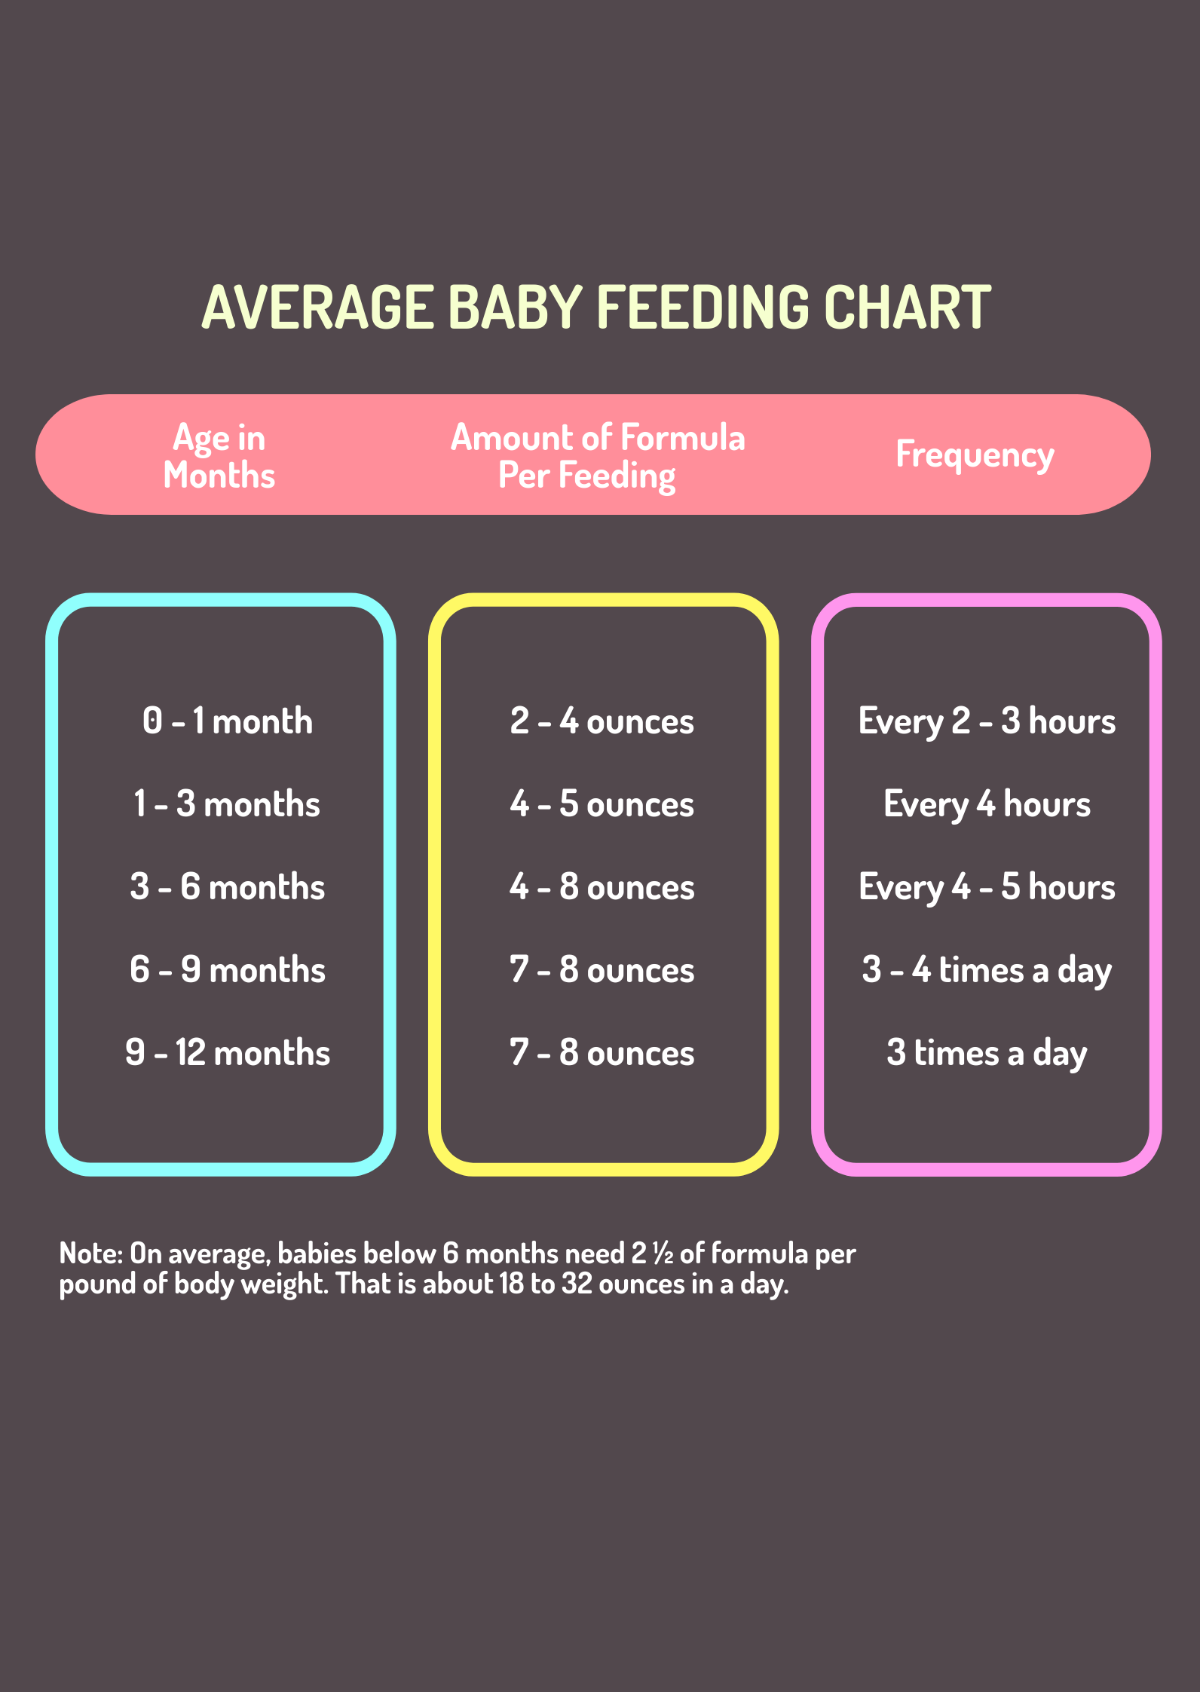 Average Baby Feeding Chart Template